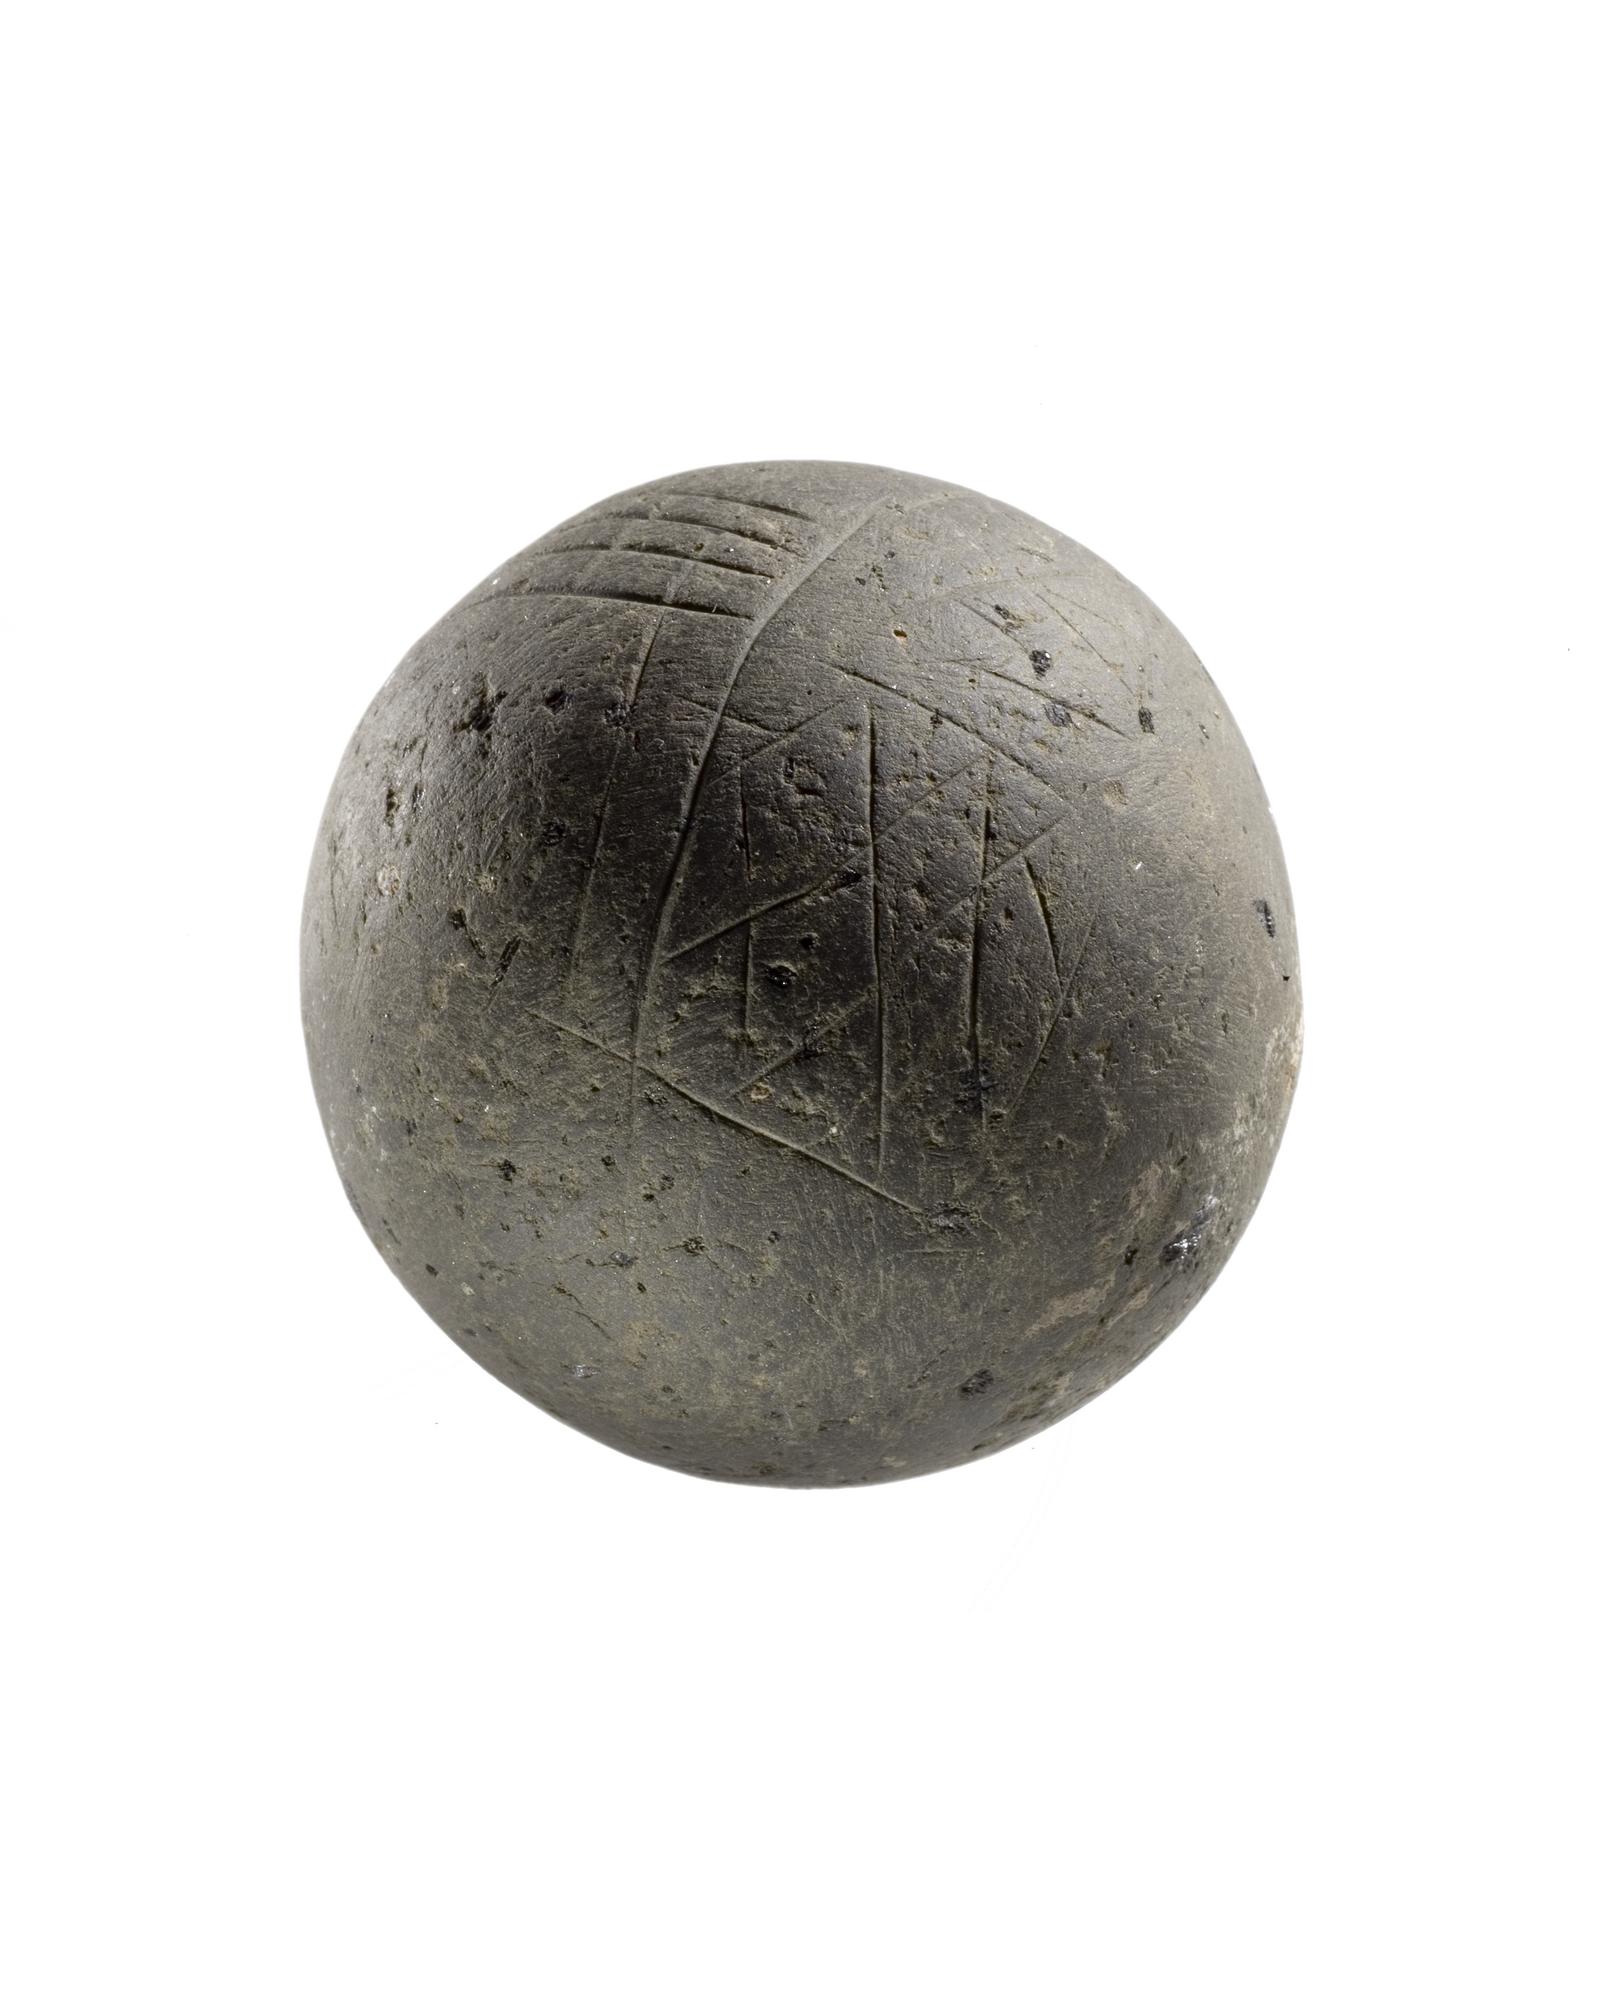 Carved stone ball from Skara Brae, 2900-2600 BC.